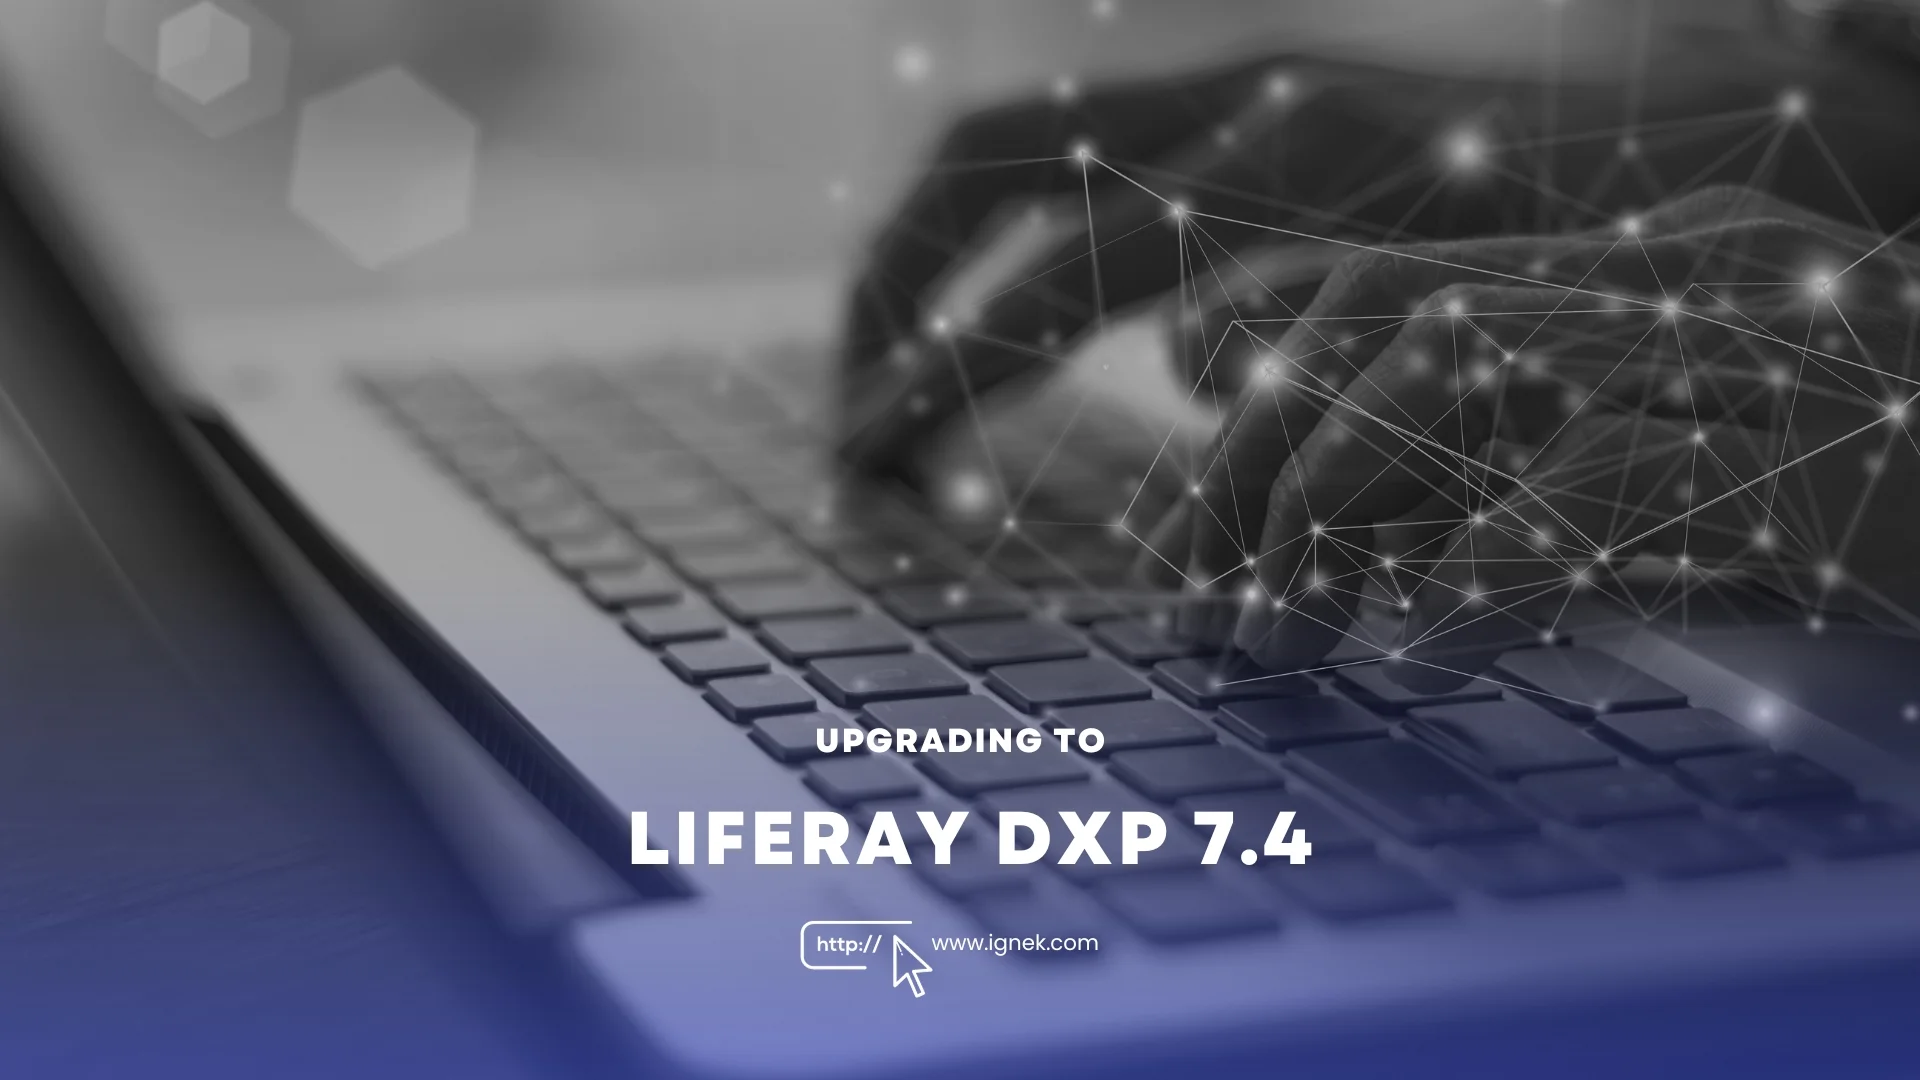 Liferay DXP 7.4 Upgrade